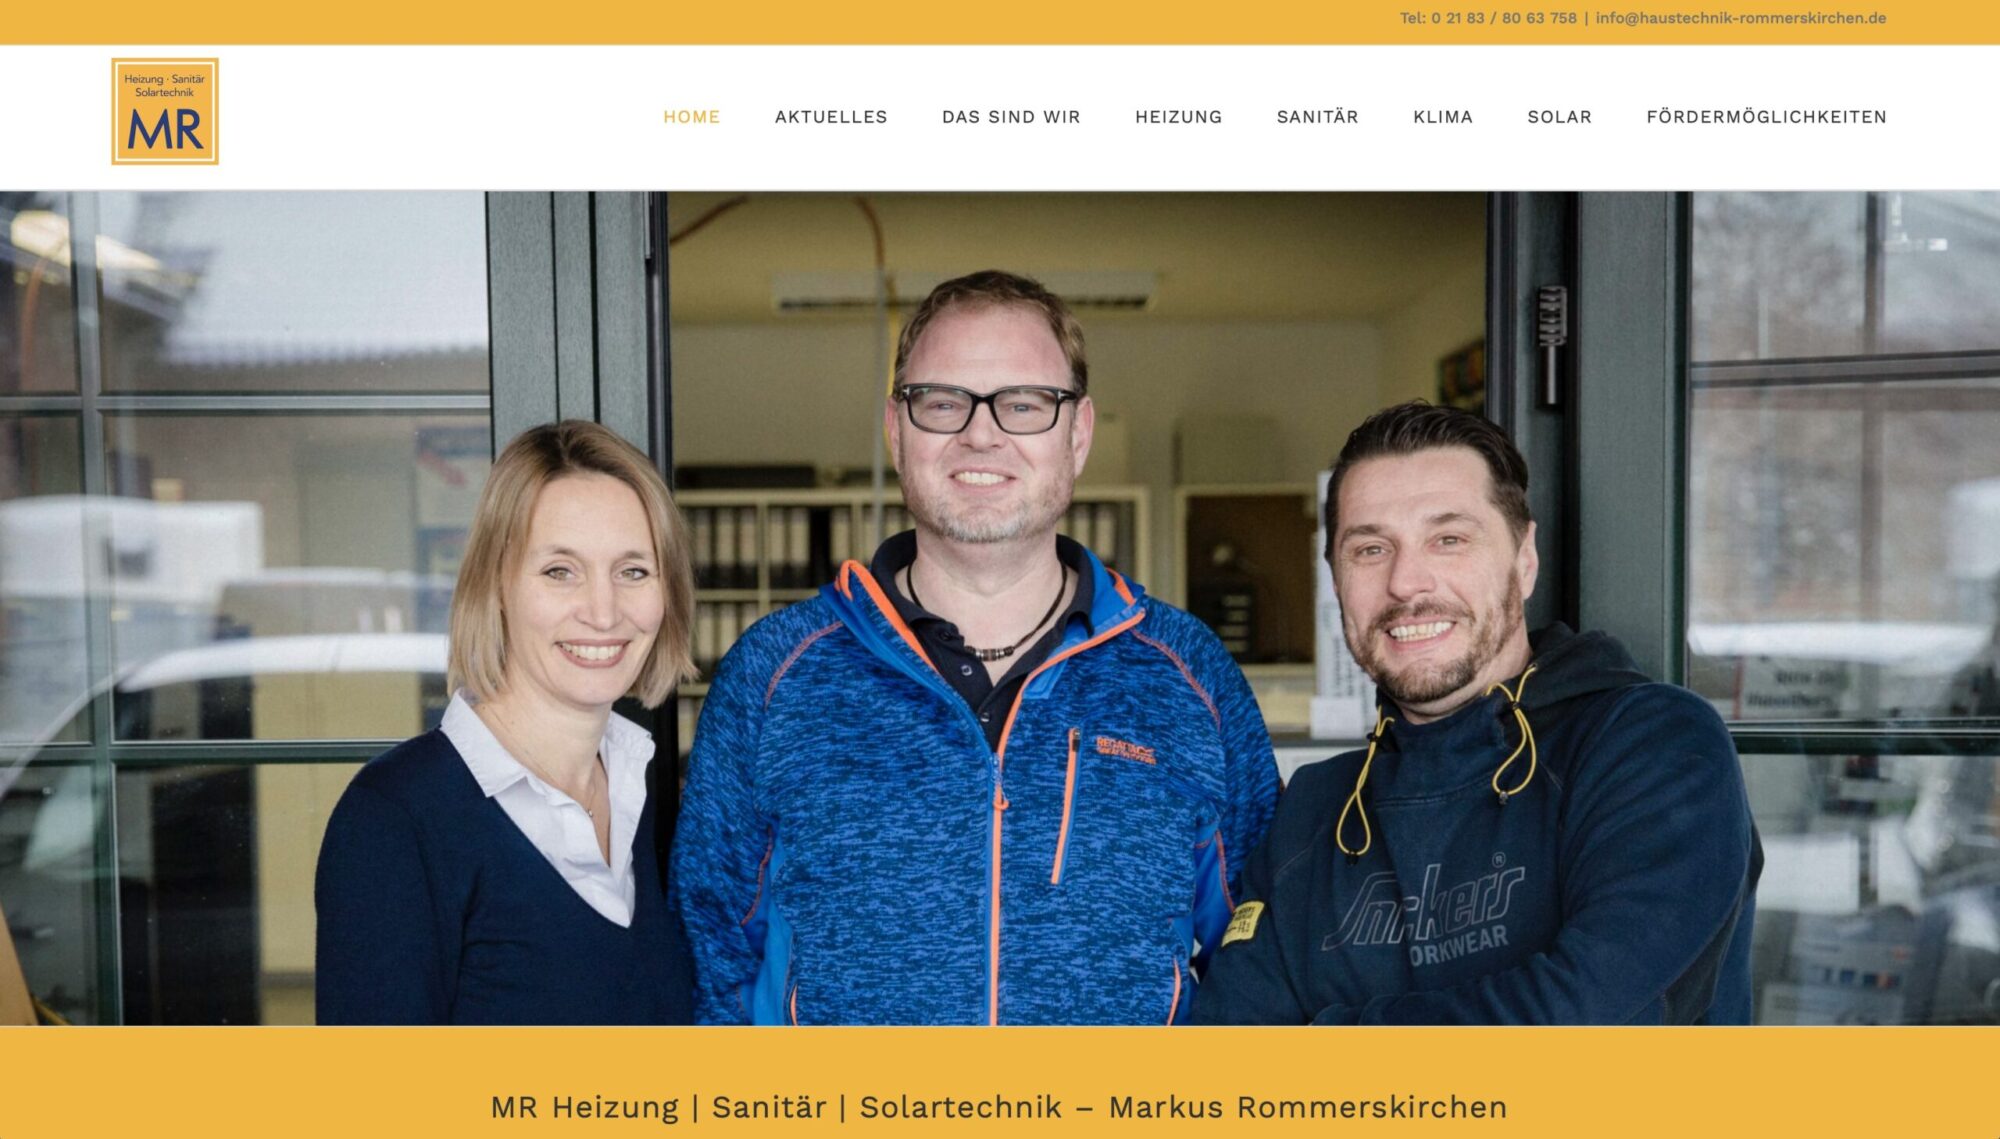 MR Heizung | Sanitär | Solartechnik, Rommerskirchen